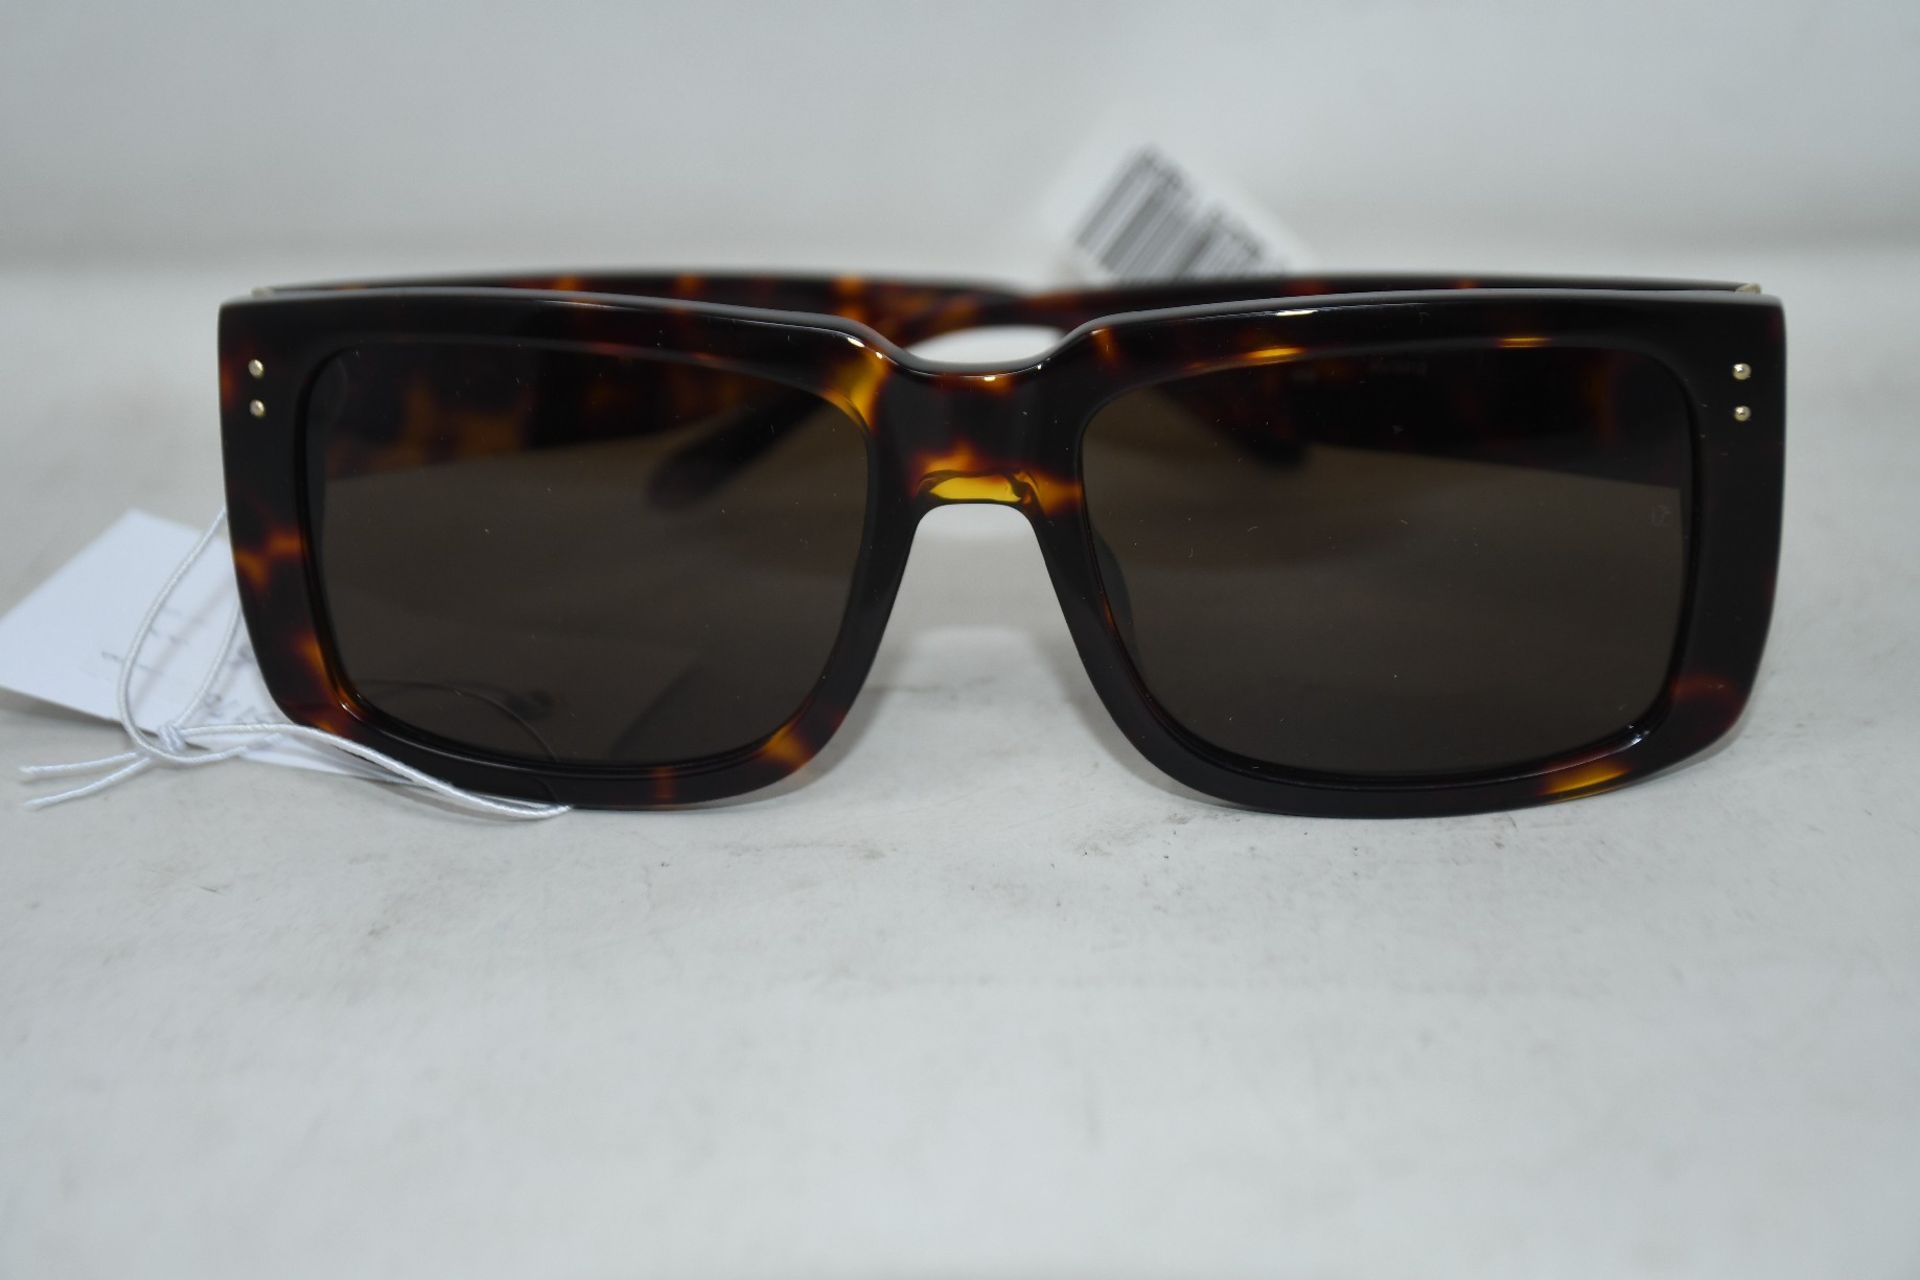 A pair of as new Linda Farrow Morrison sunglasses (RRP £300 - no case).